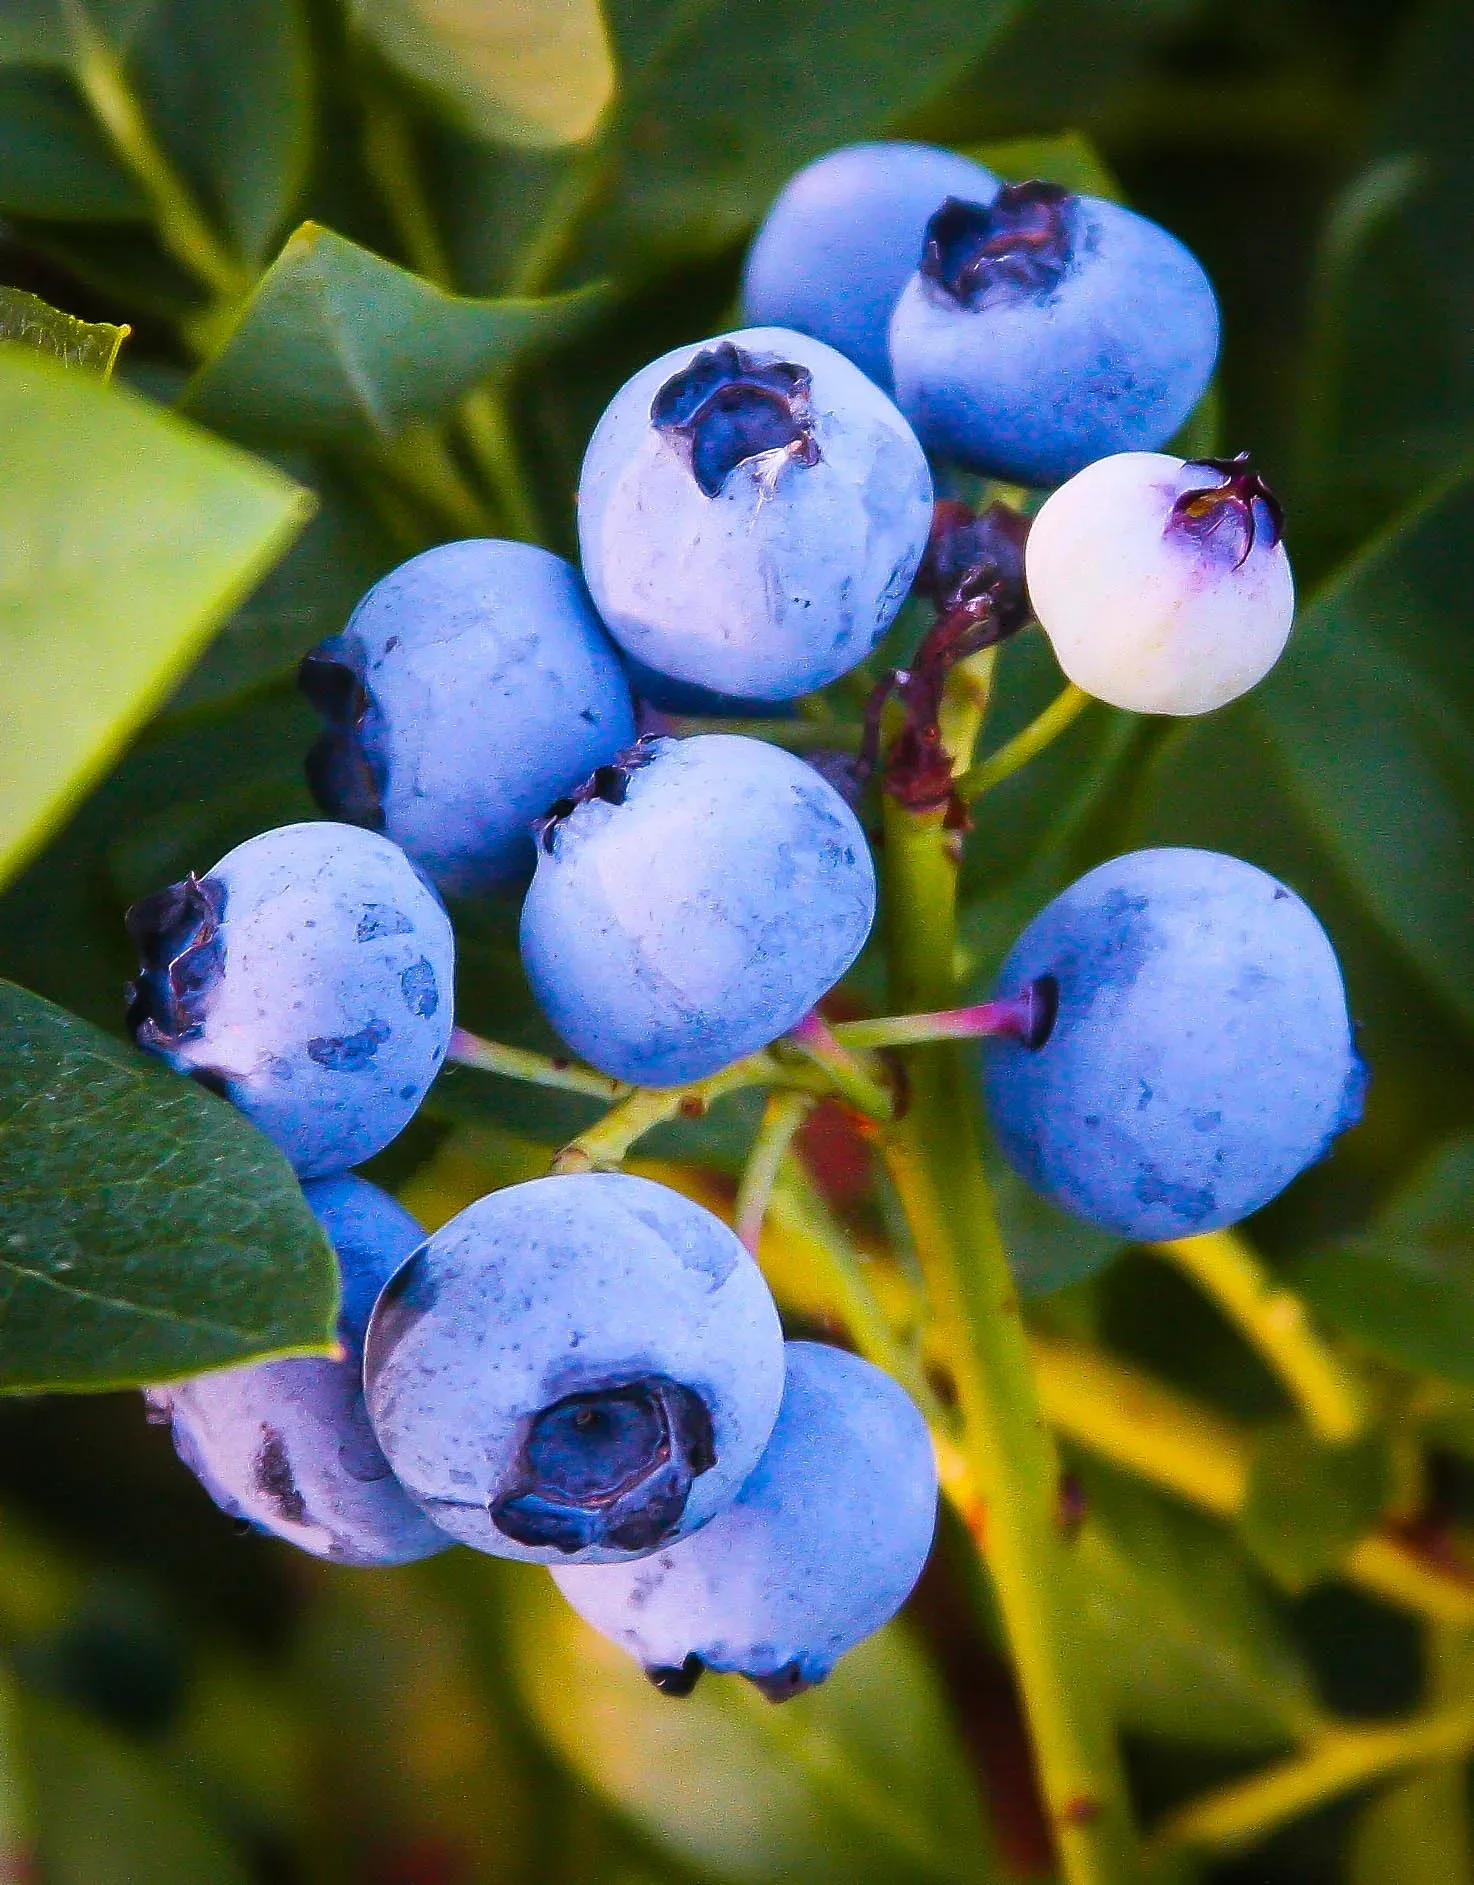 Powder Blue Blueberry